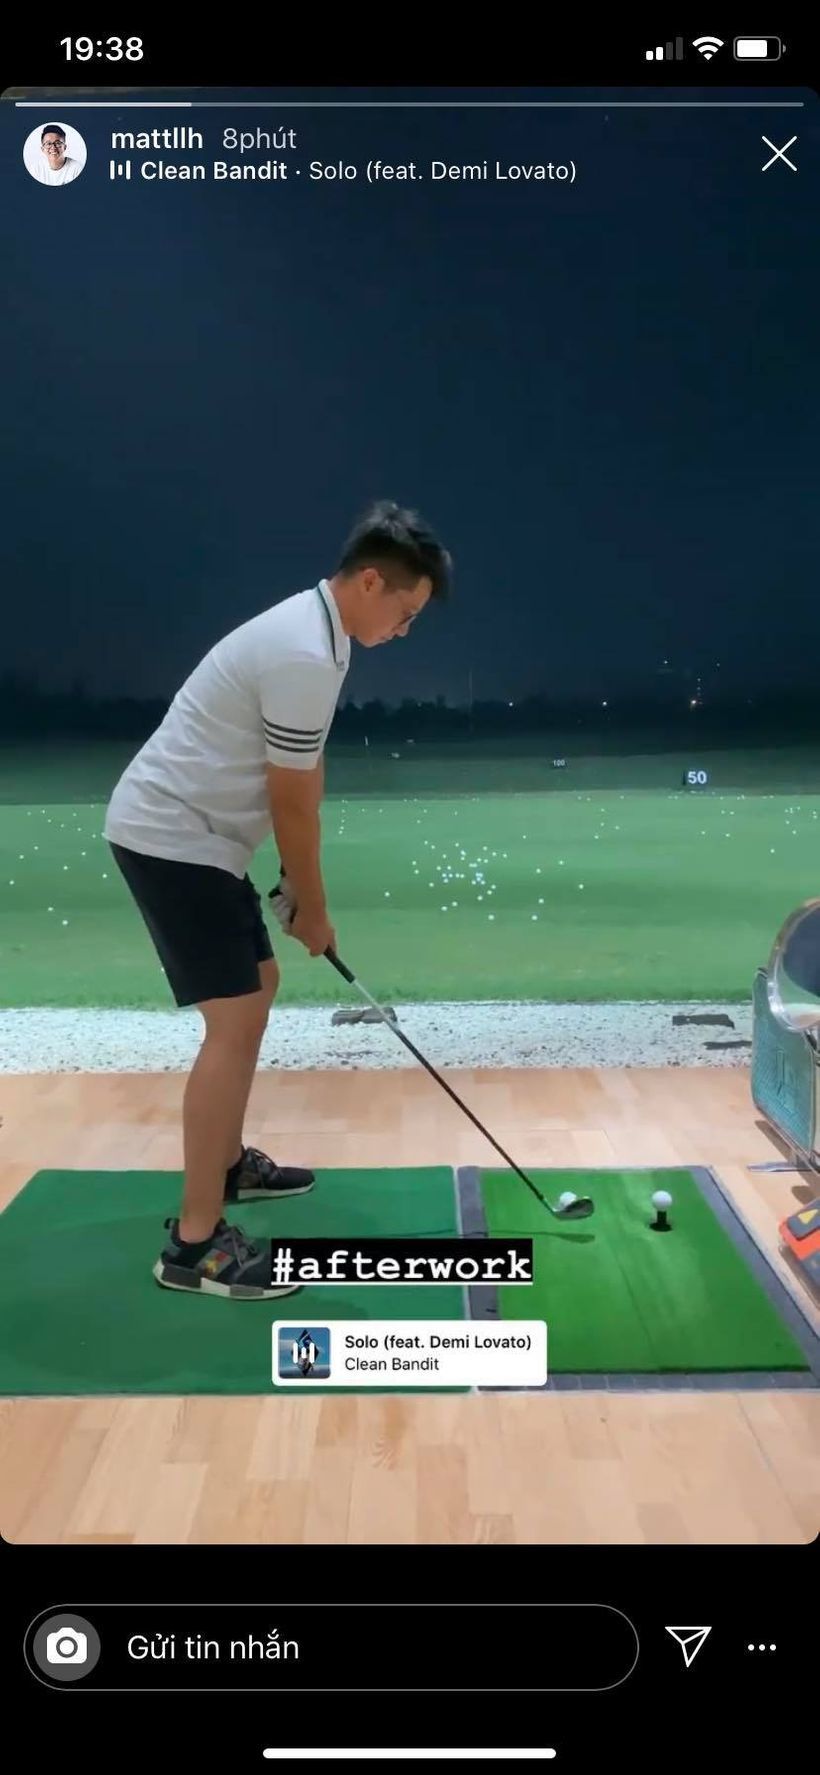  
Matt Liu đi đánh golf một mình (Ảnh: FBNV). - Tin sao Viet - Tin tuc sao Viet - Scandal sao Viet - Tin tuc cua Sao - Tin cua Sao